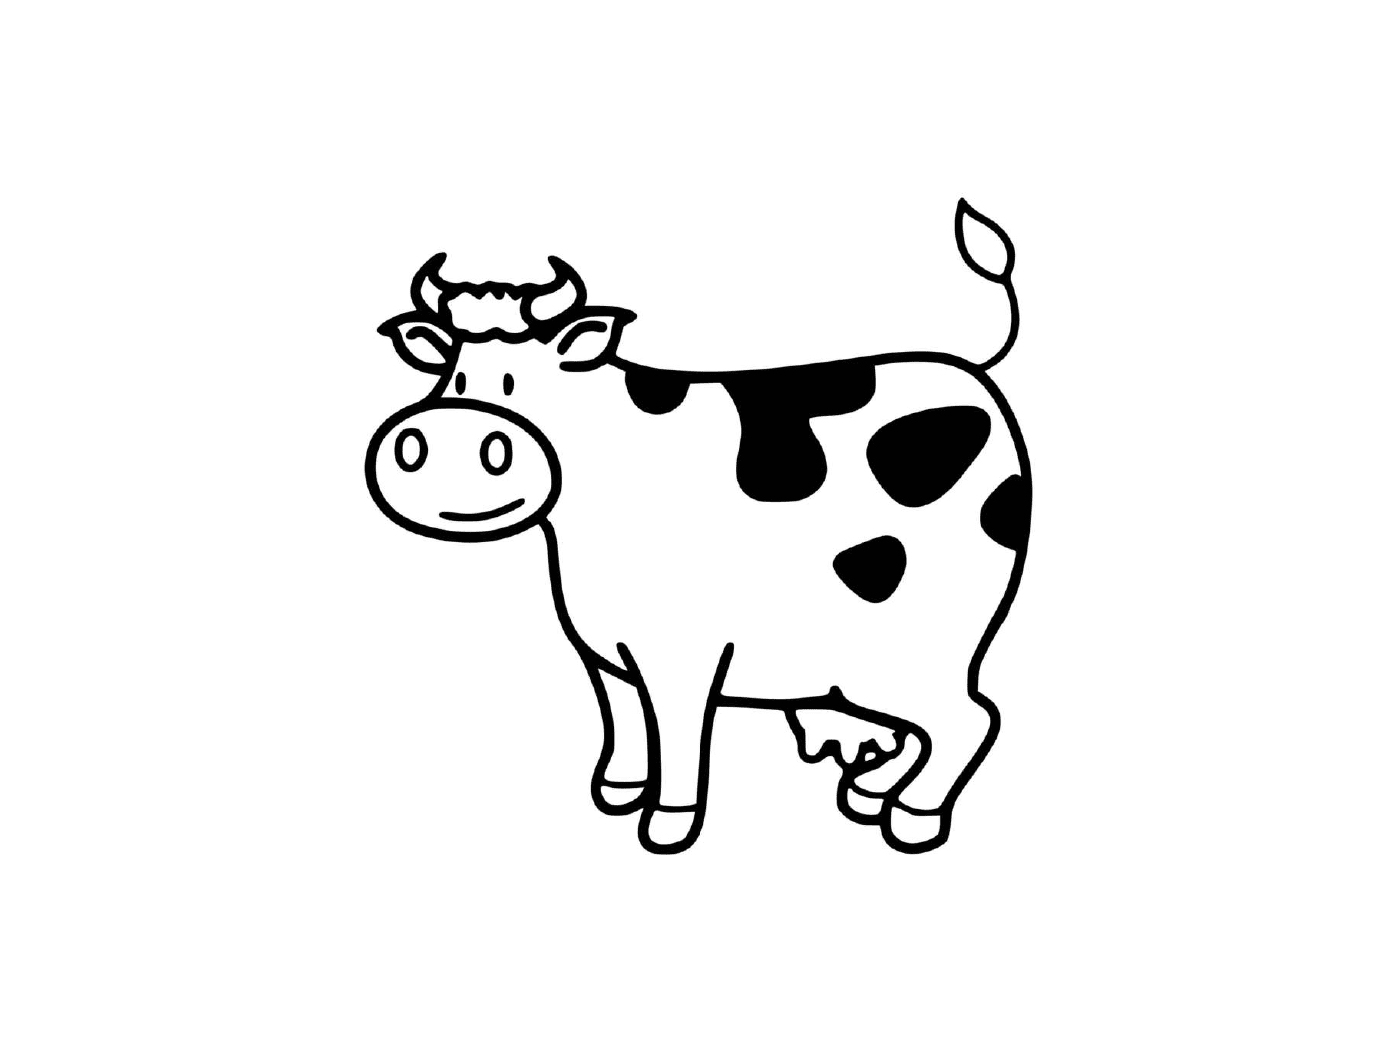  Granja de animales, vaca 